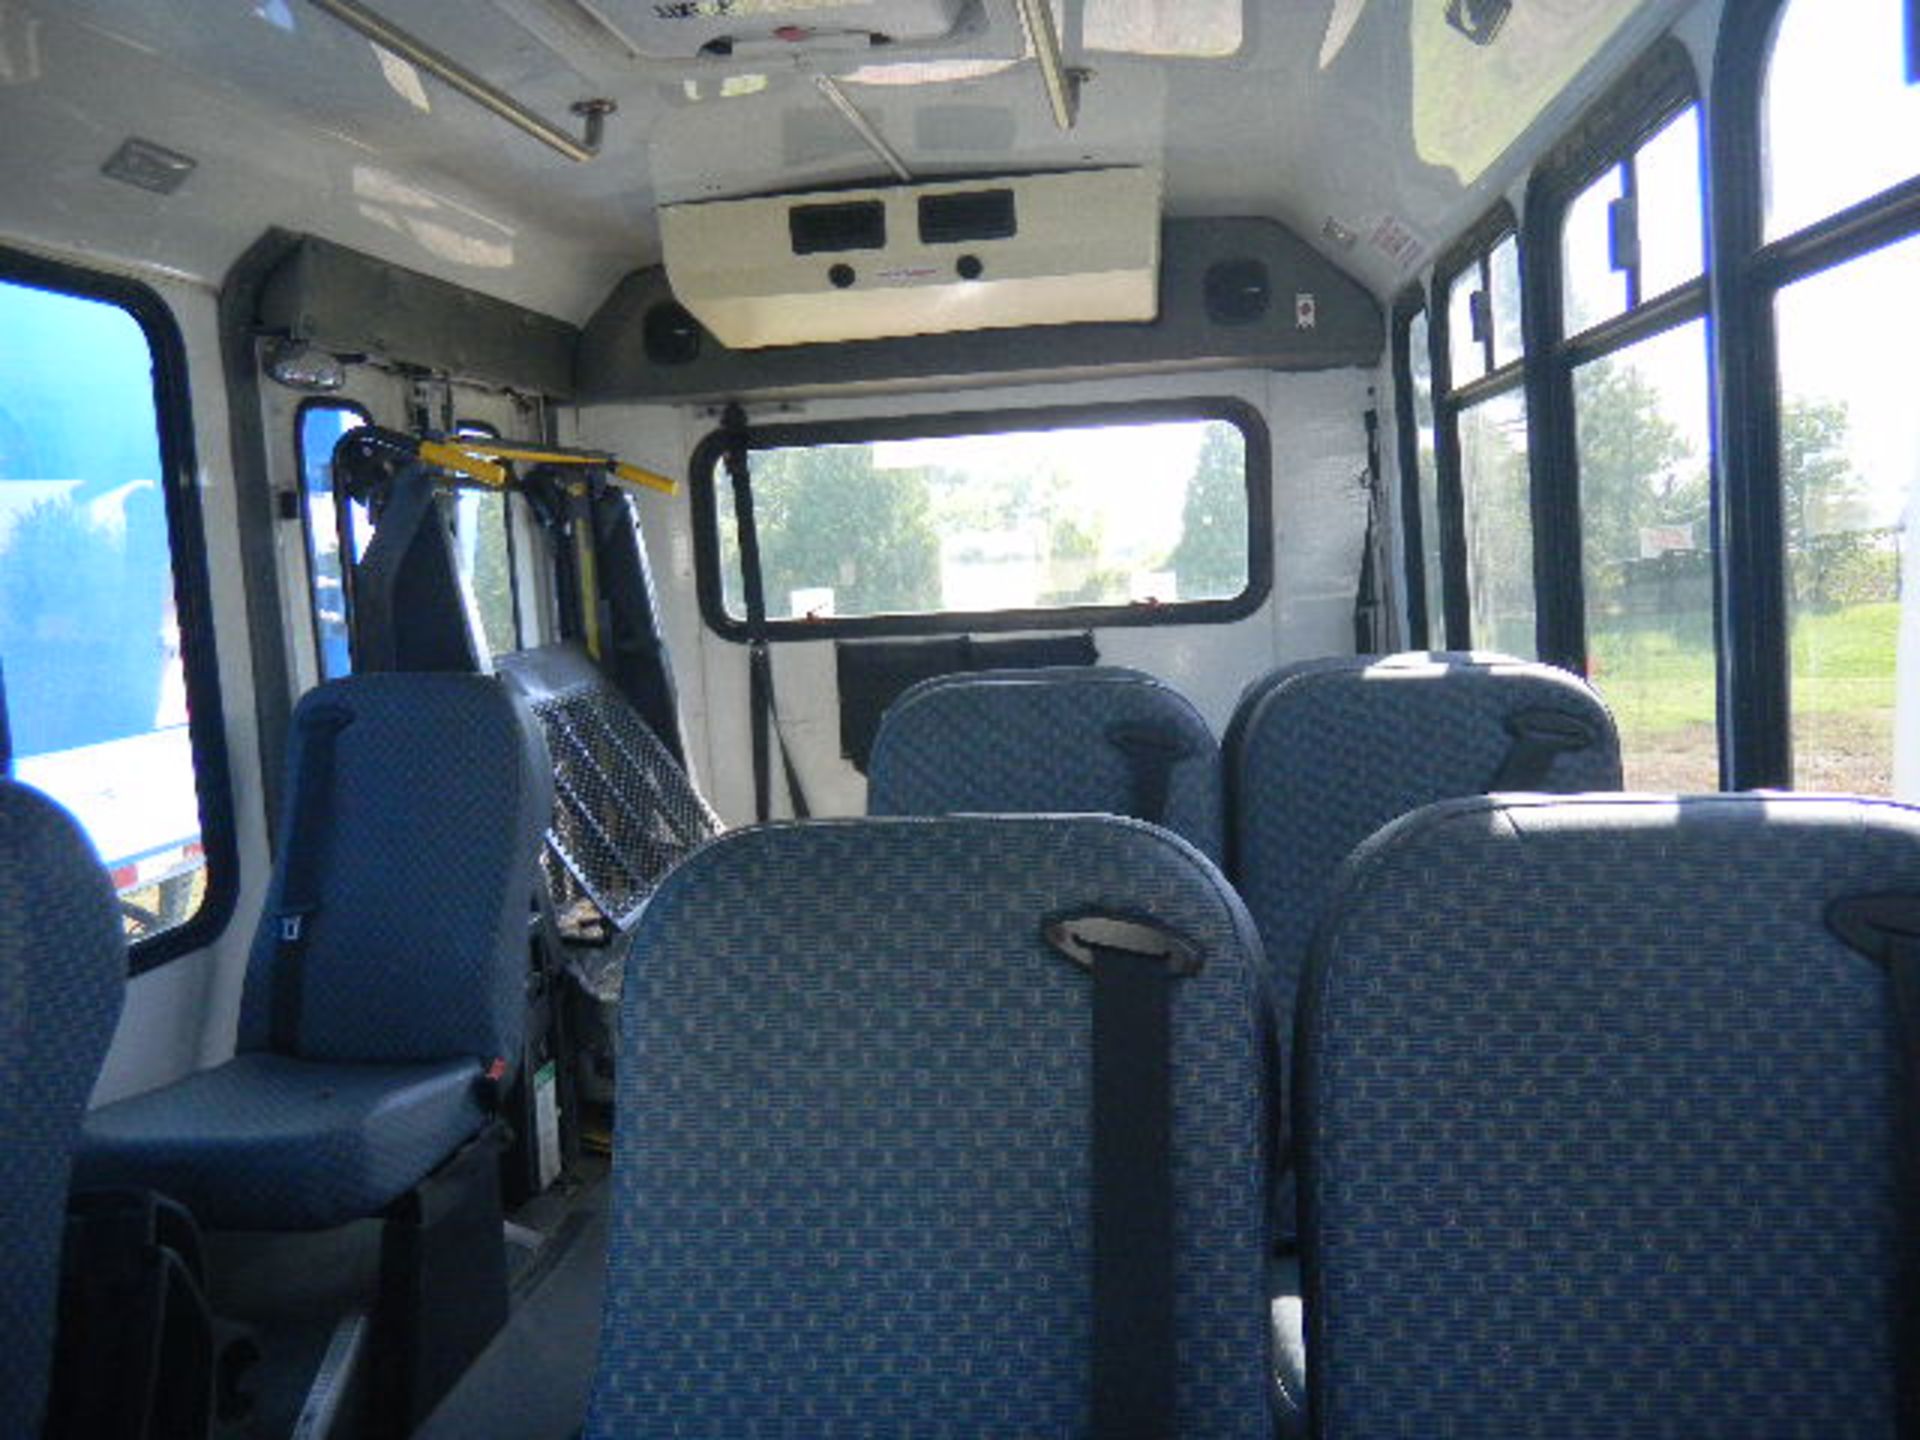 2009 Eldorado Aerolite Transit Bus - Asset I.D. #622 - Last of Vin (A88399) - Image 4 of 8